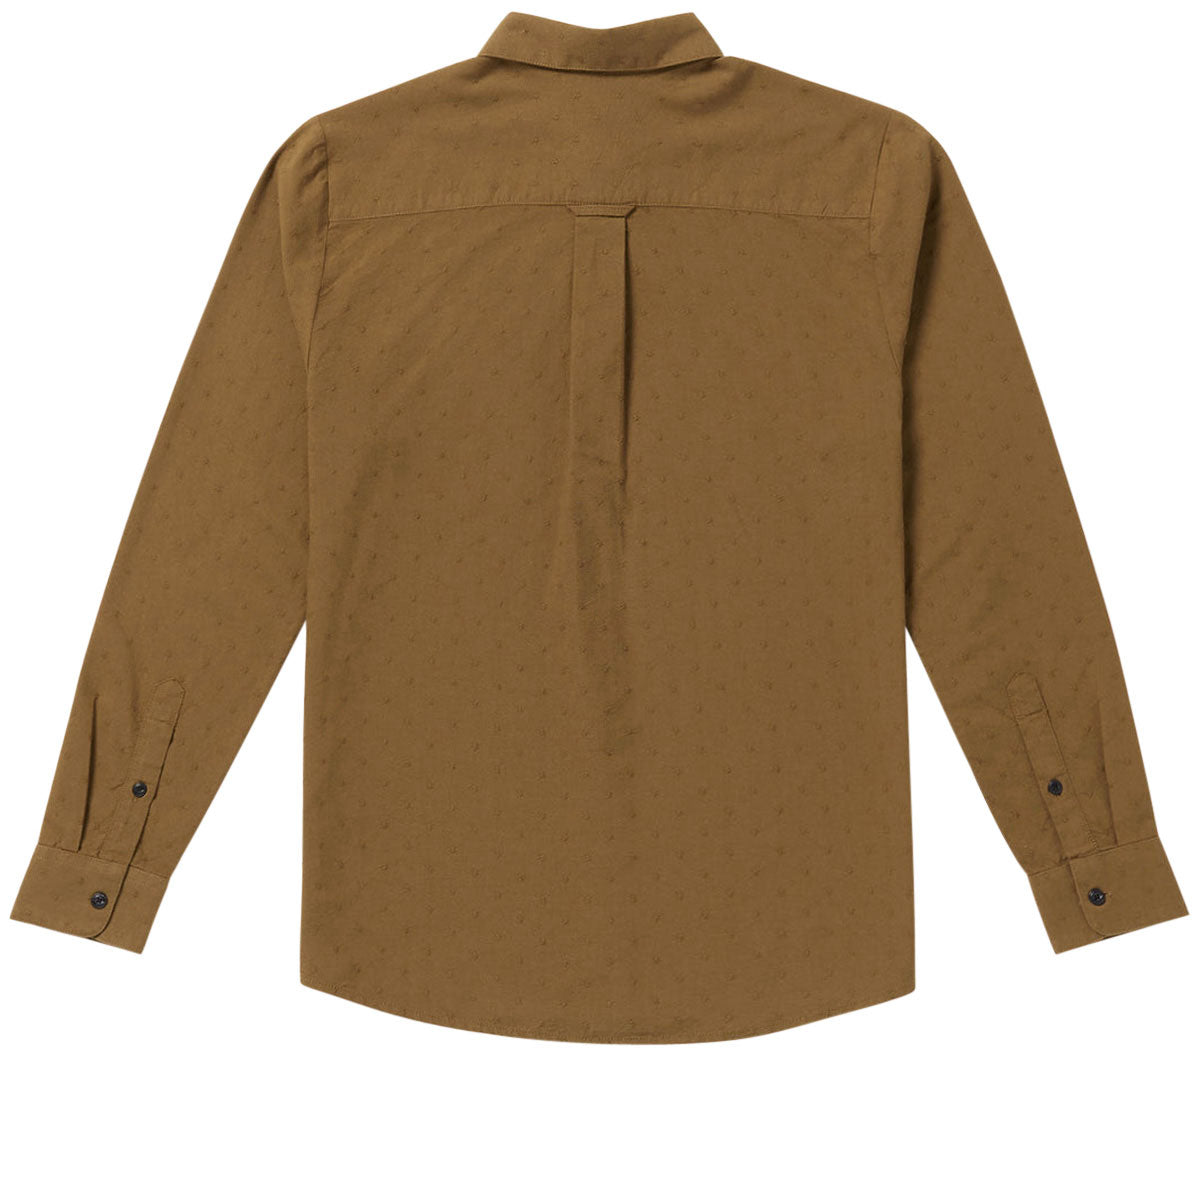 Volcom Date Knight Long Sleeve Shirt - Mud image 2